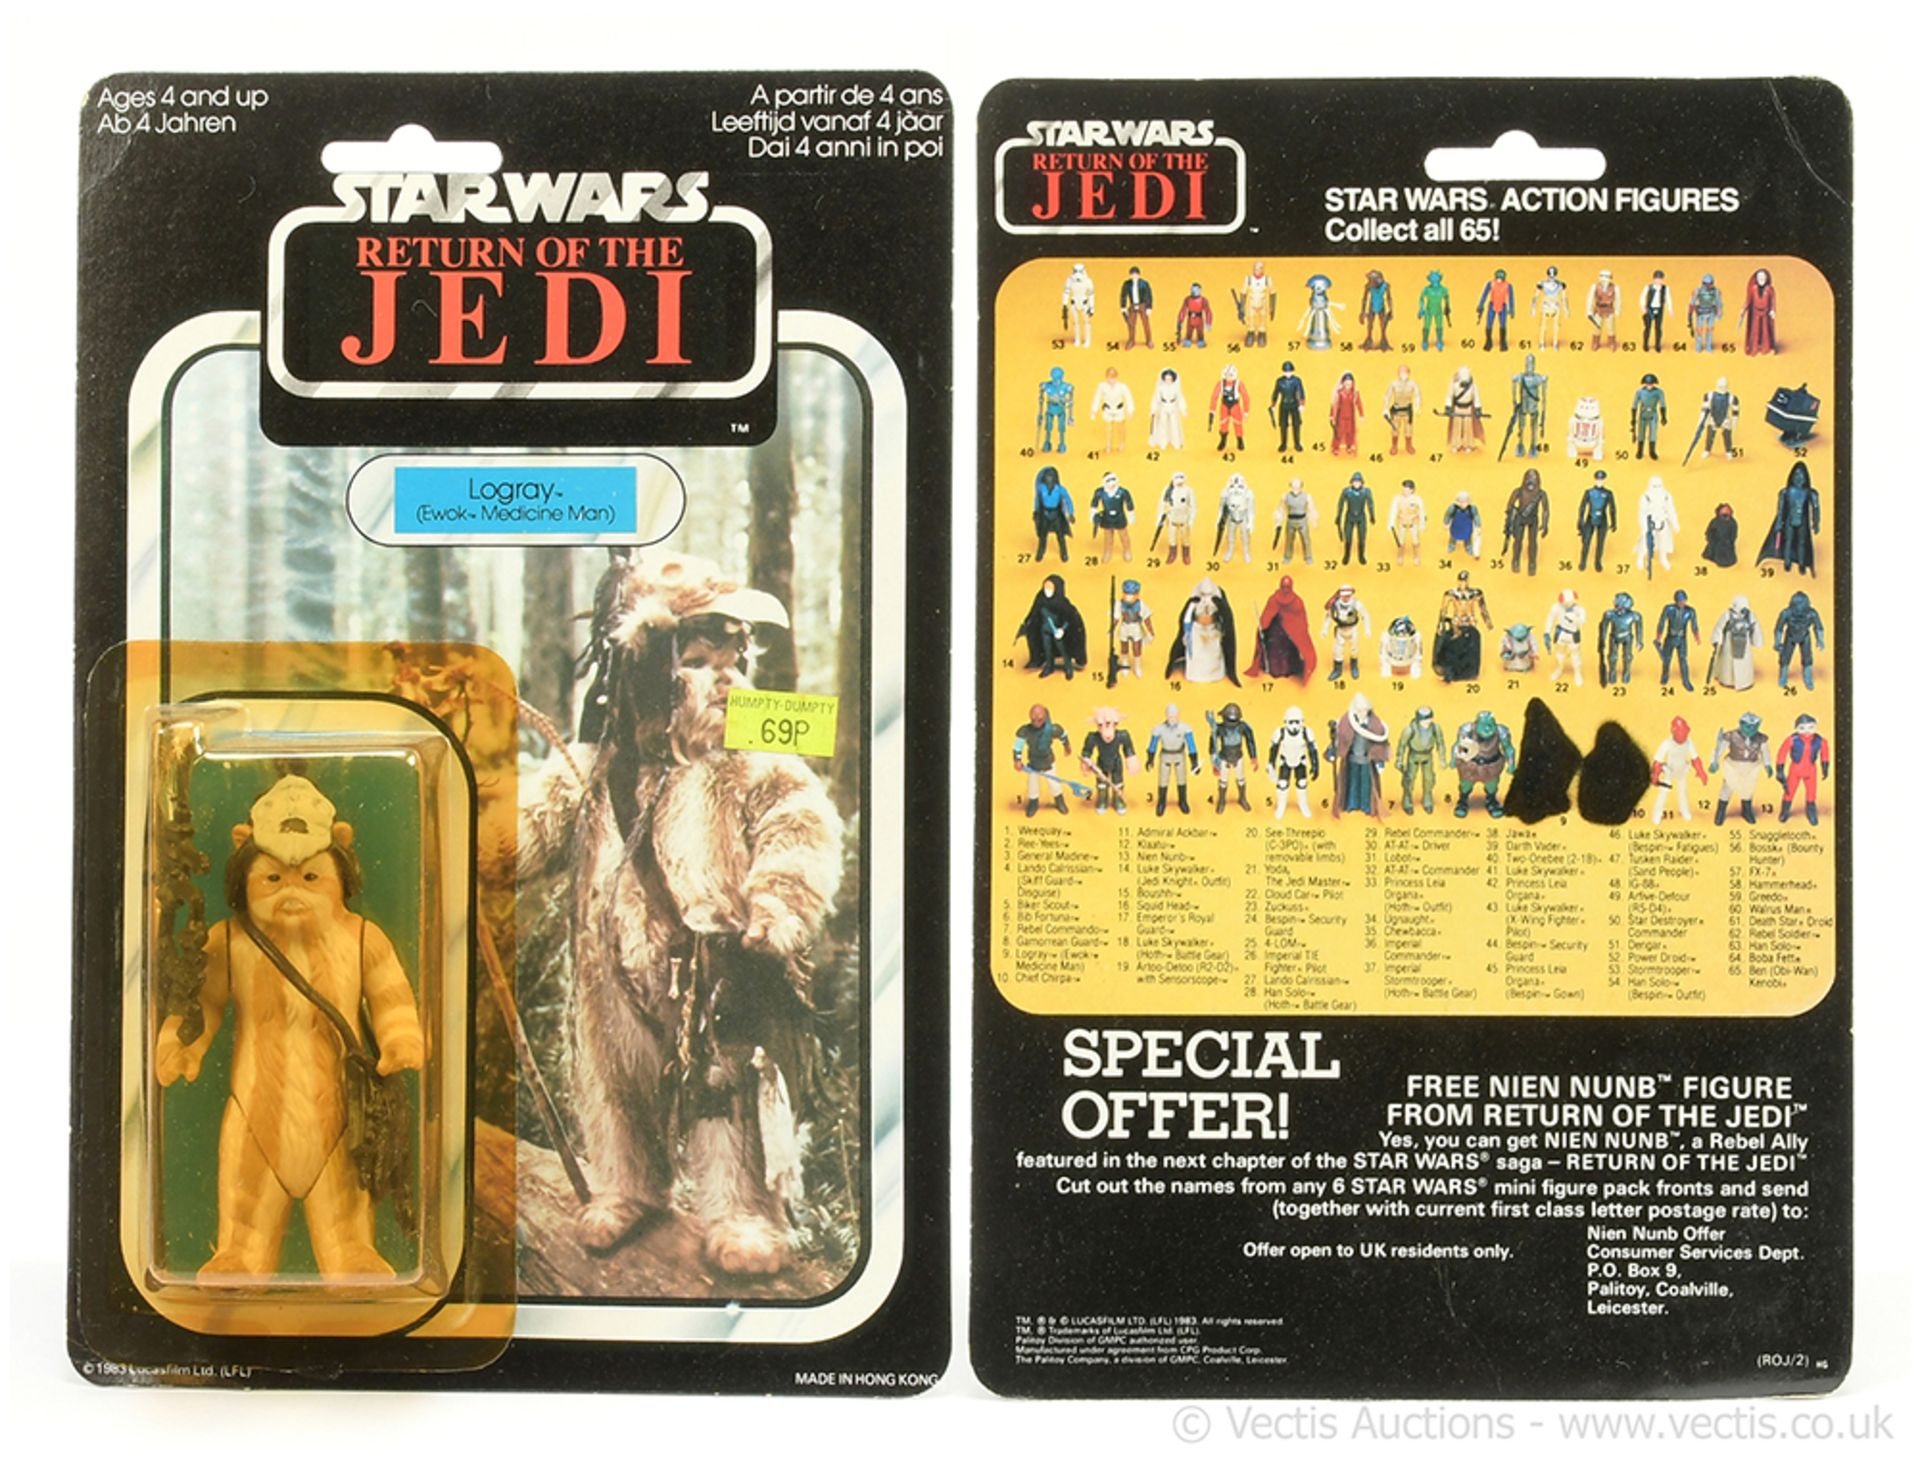 Palitoy Star Wars vintage Return of the Jedi